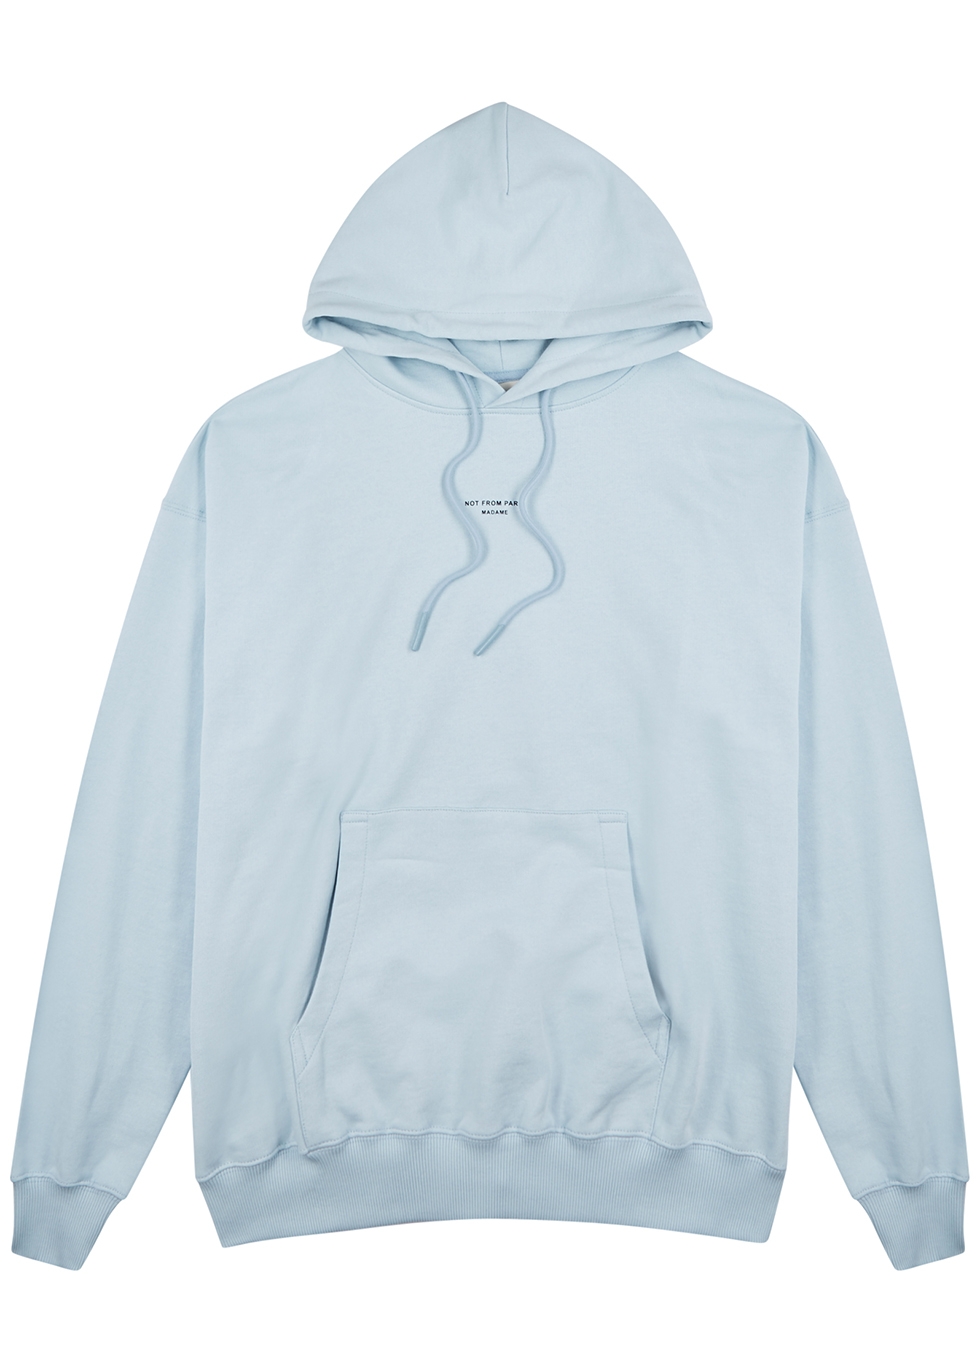 Light blue hooded cotton sweatshirt